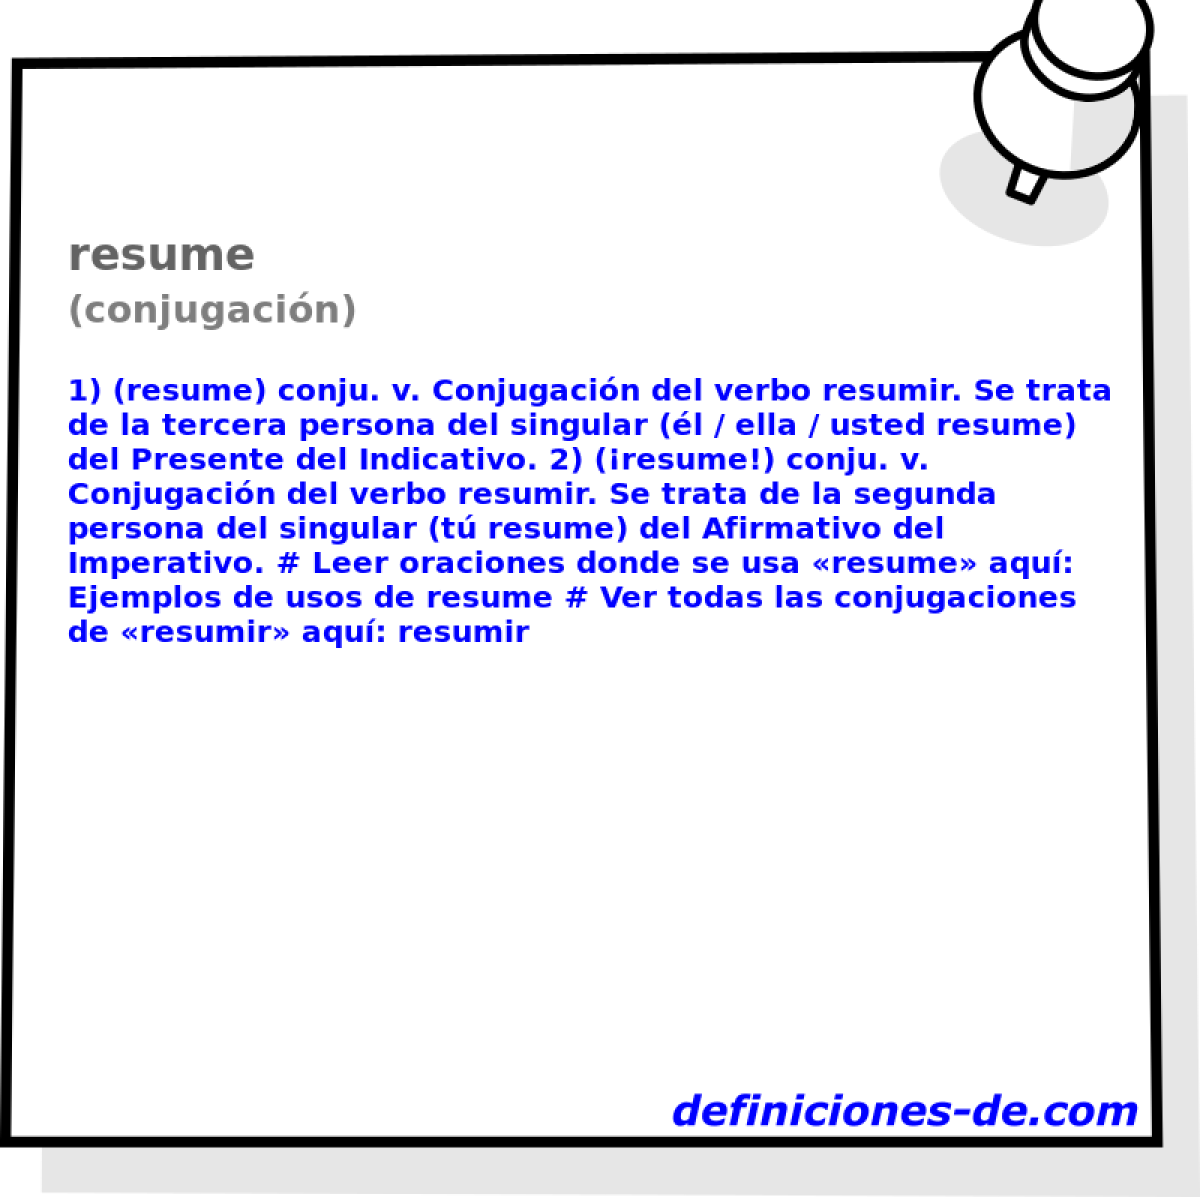 resume (conjugacin)